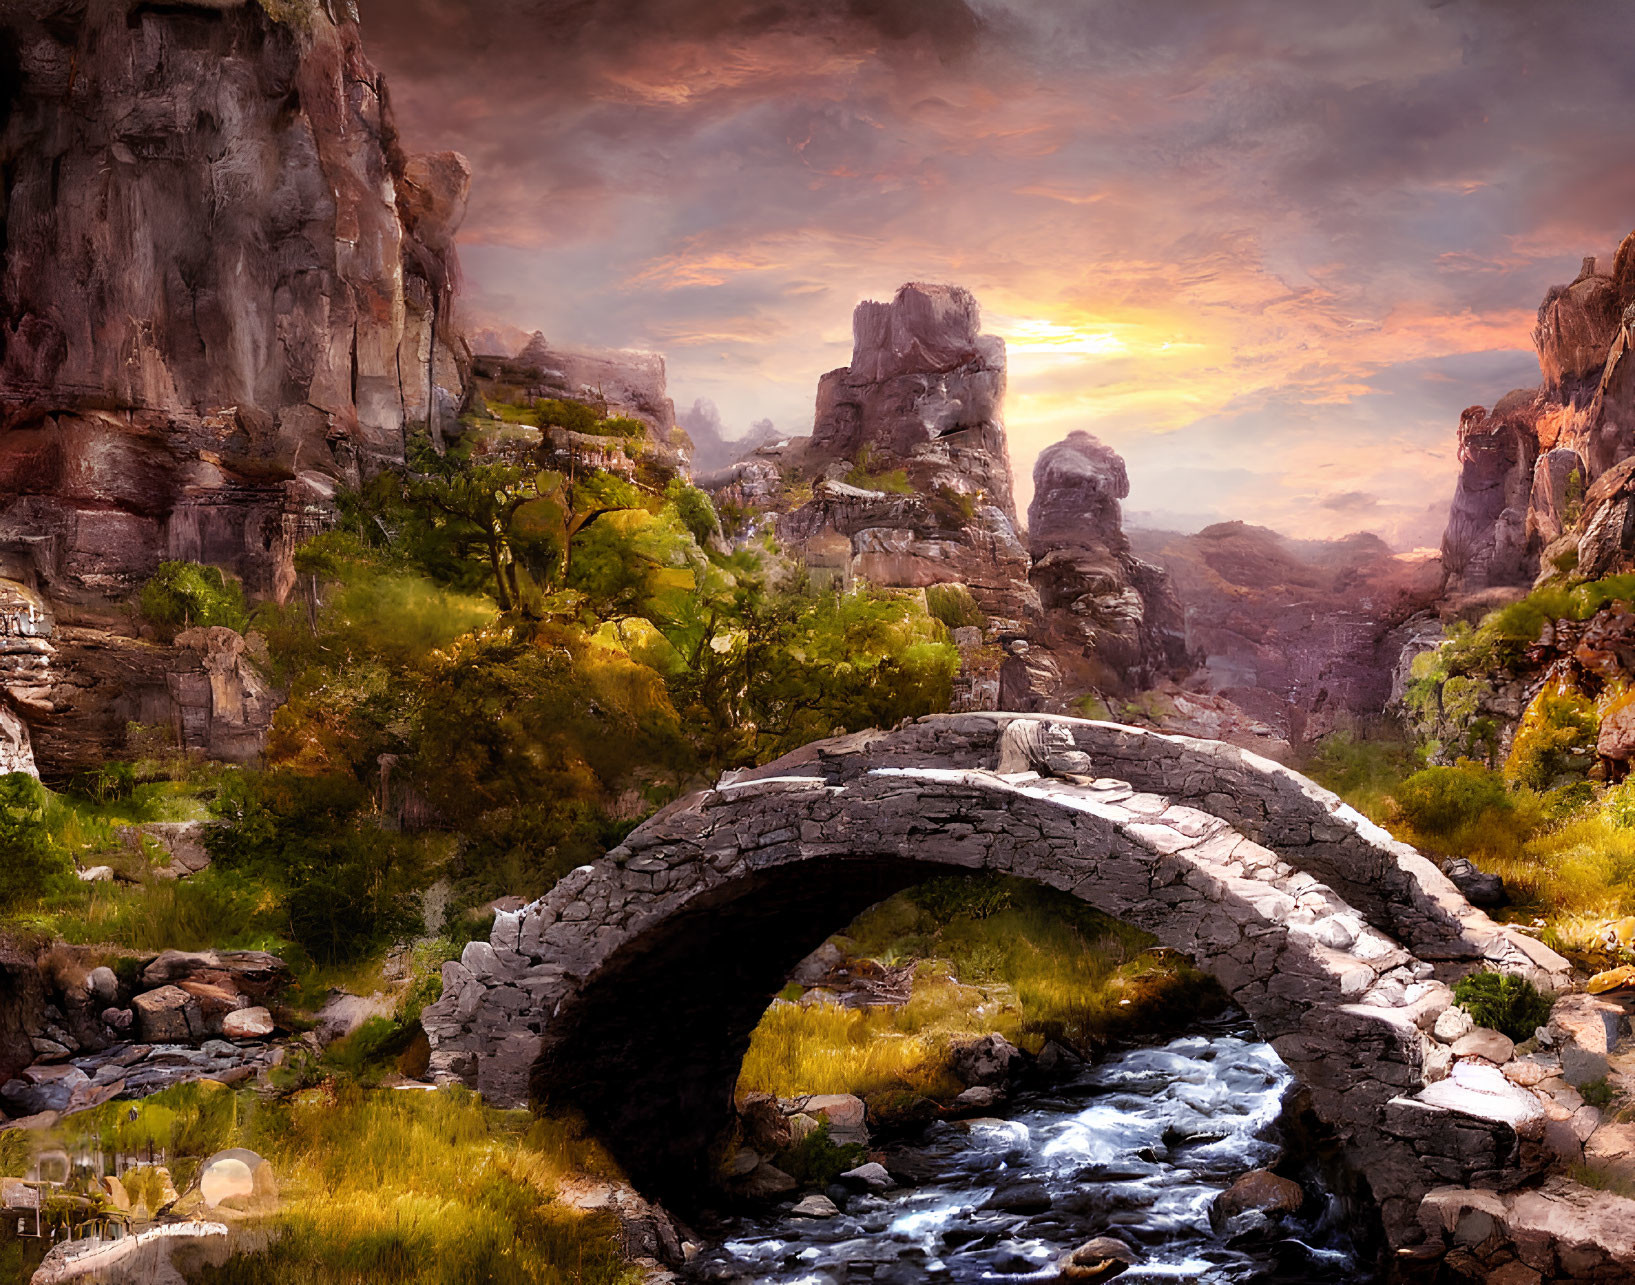 Ancient stone bridge over serene stream amidst dramatic sunset sky